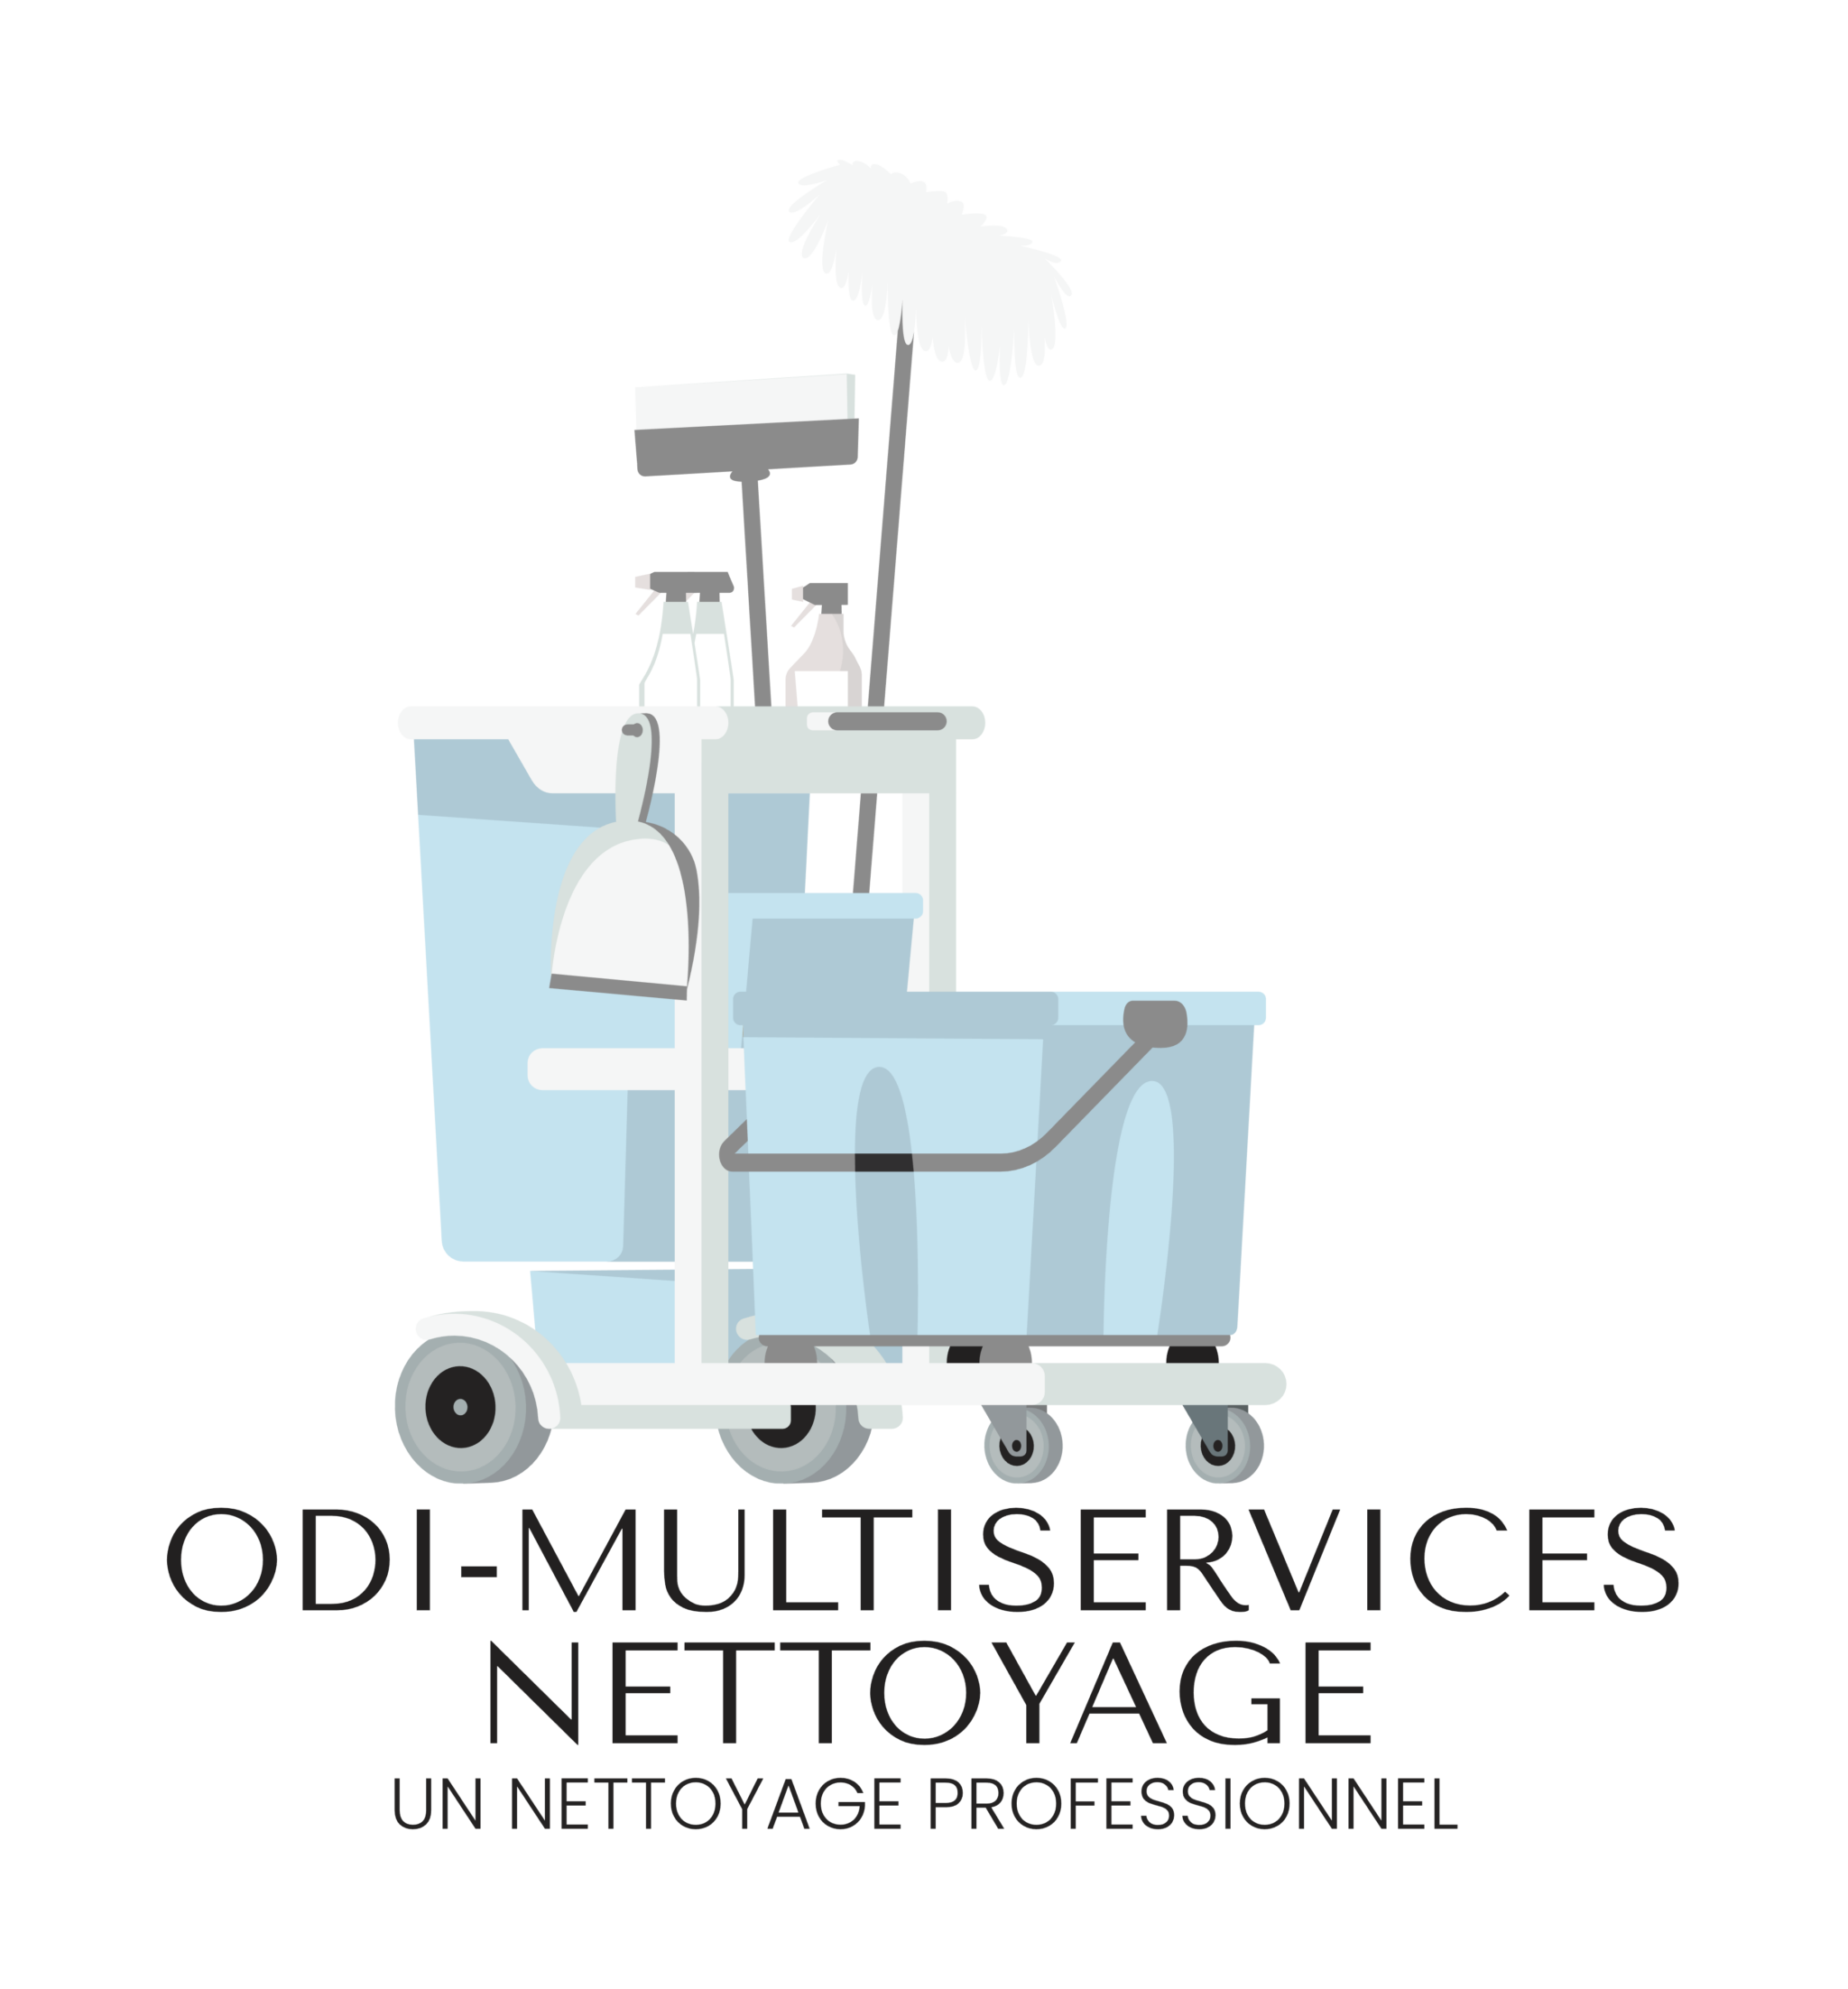 ODI-MULTISERVICES NETTOYAGE